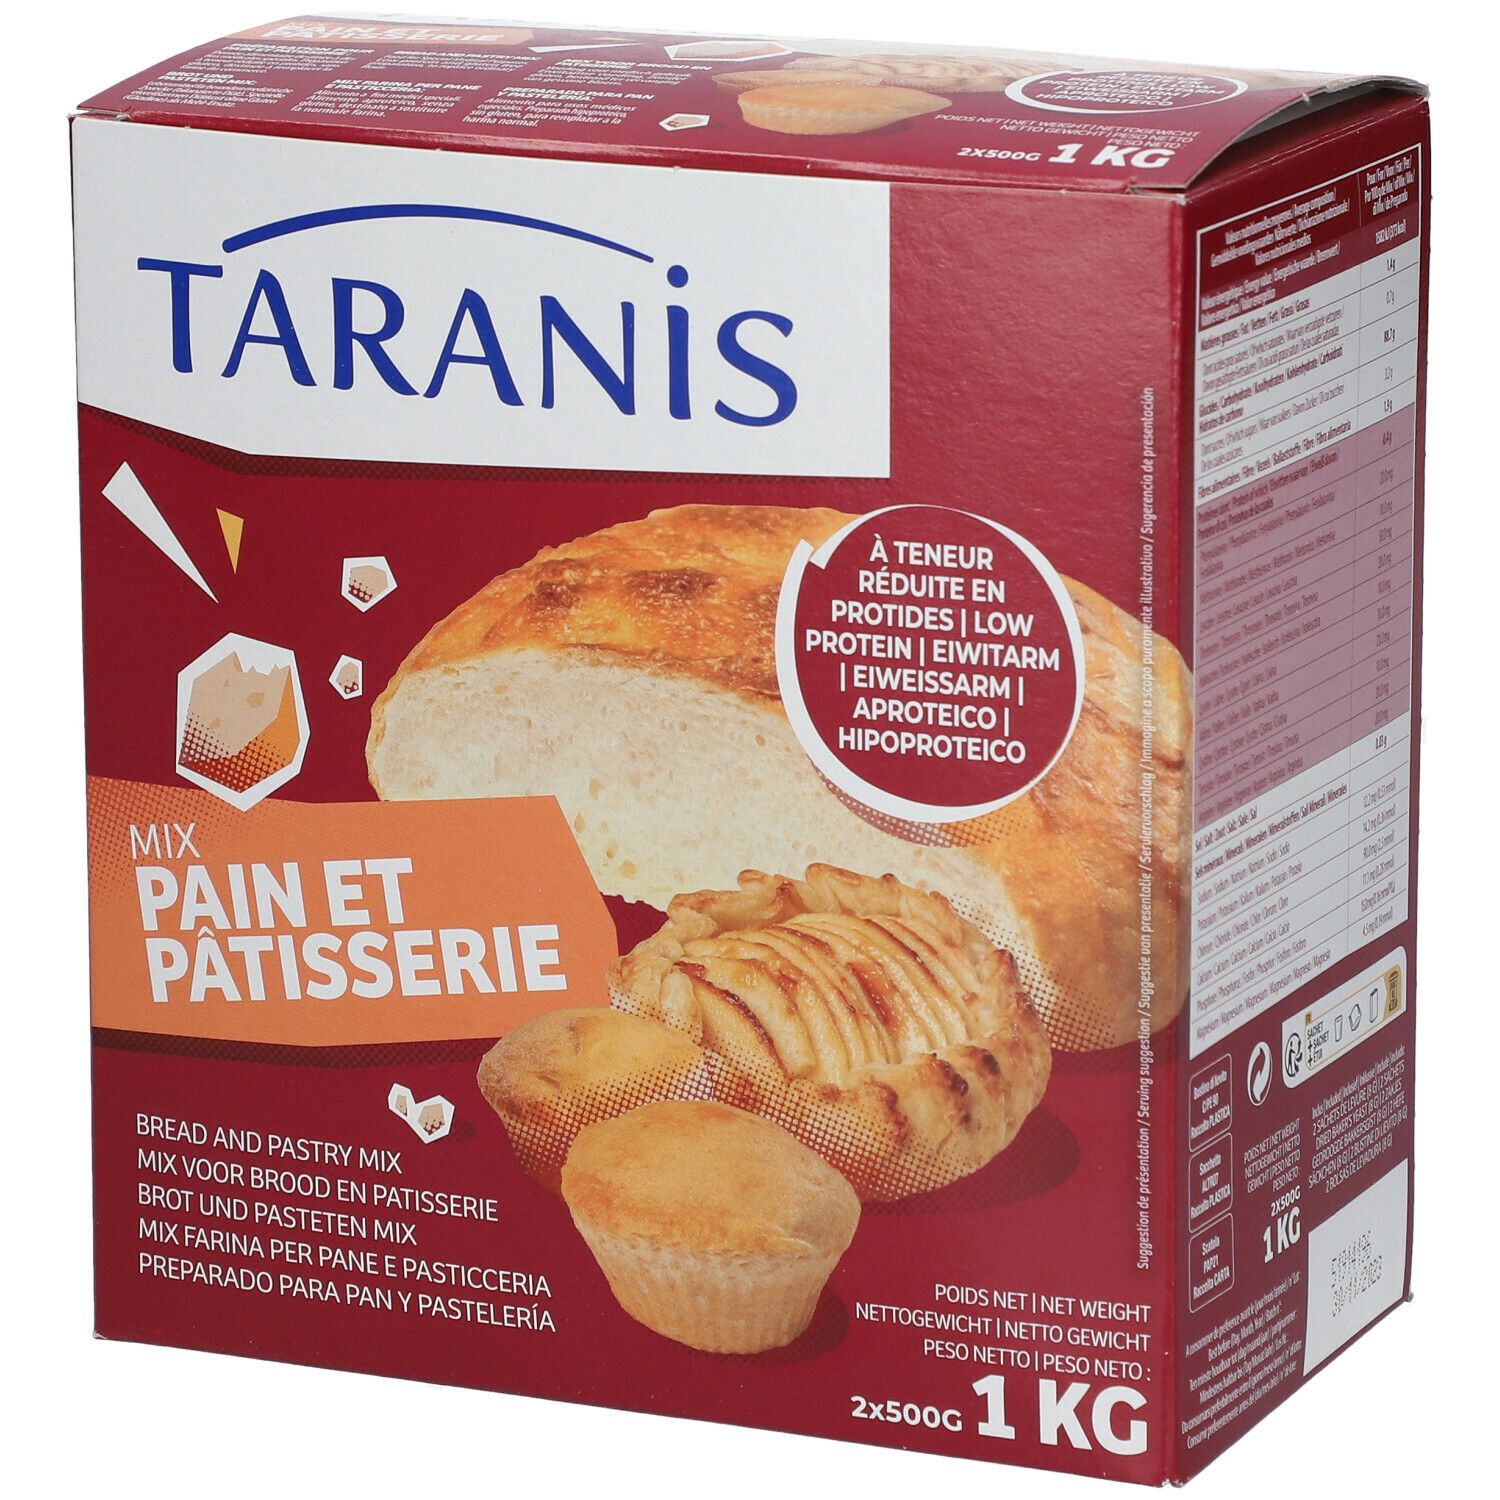 Taranis Mix pain et pâtisserie